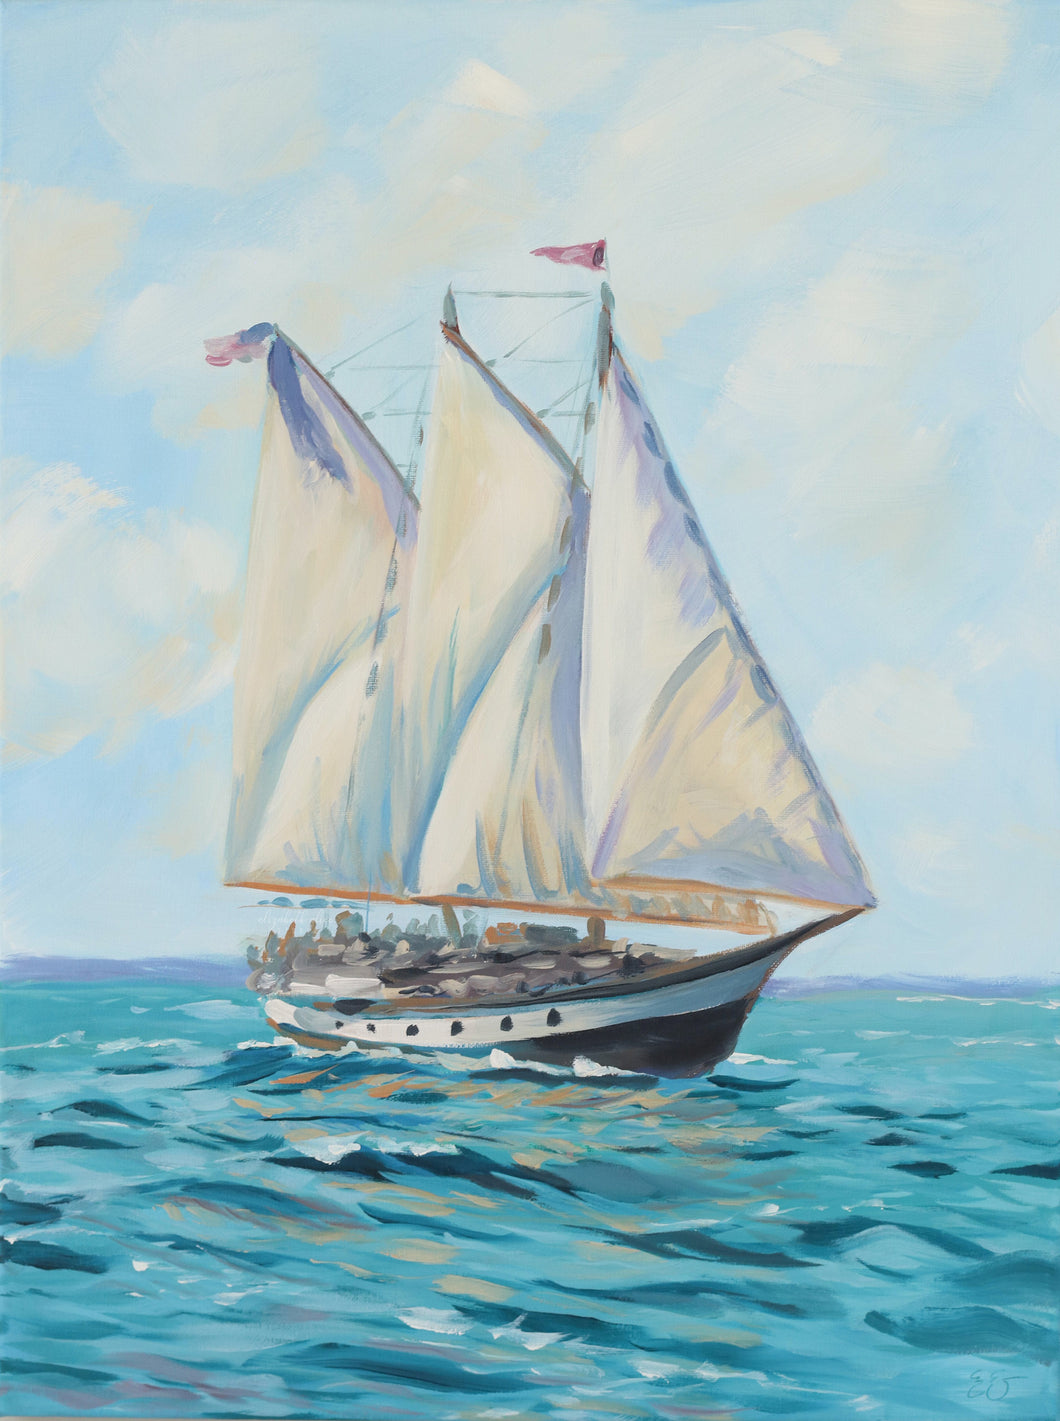 Schooner on the Chesapeake - 18 x 24